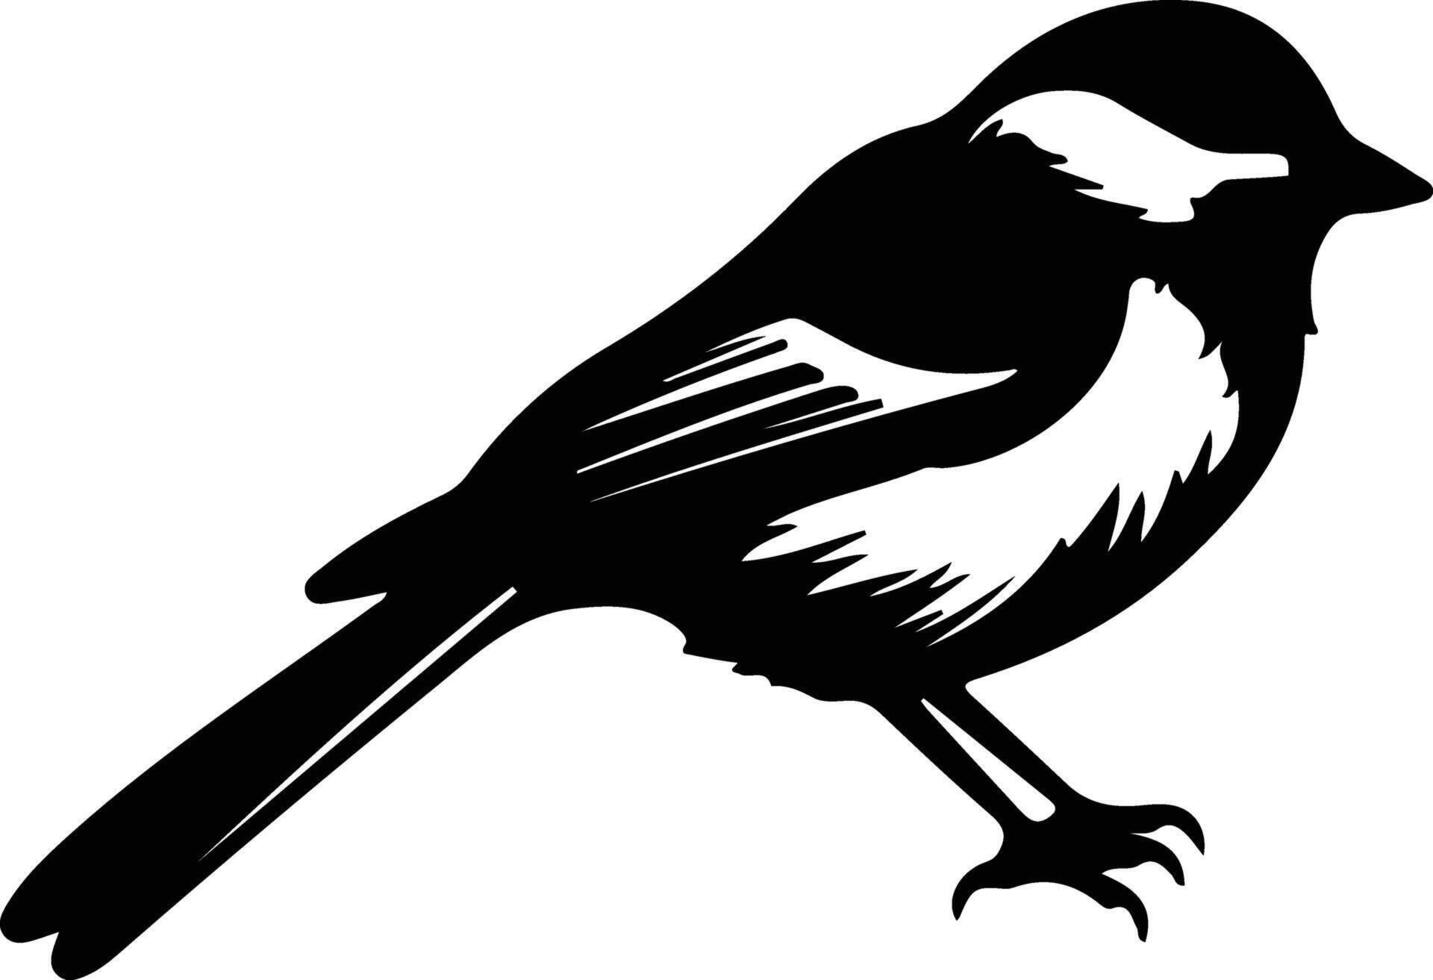 chickadee black silhouette vector